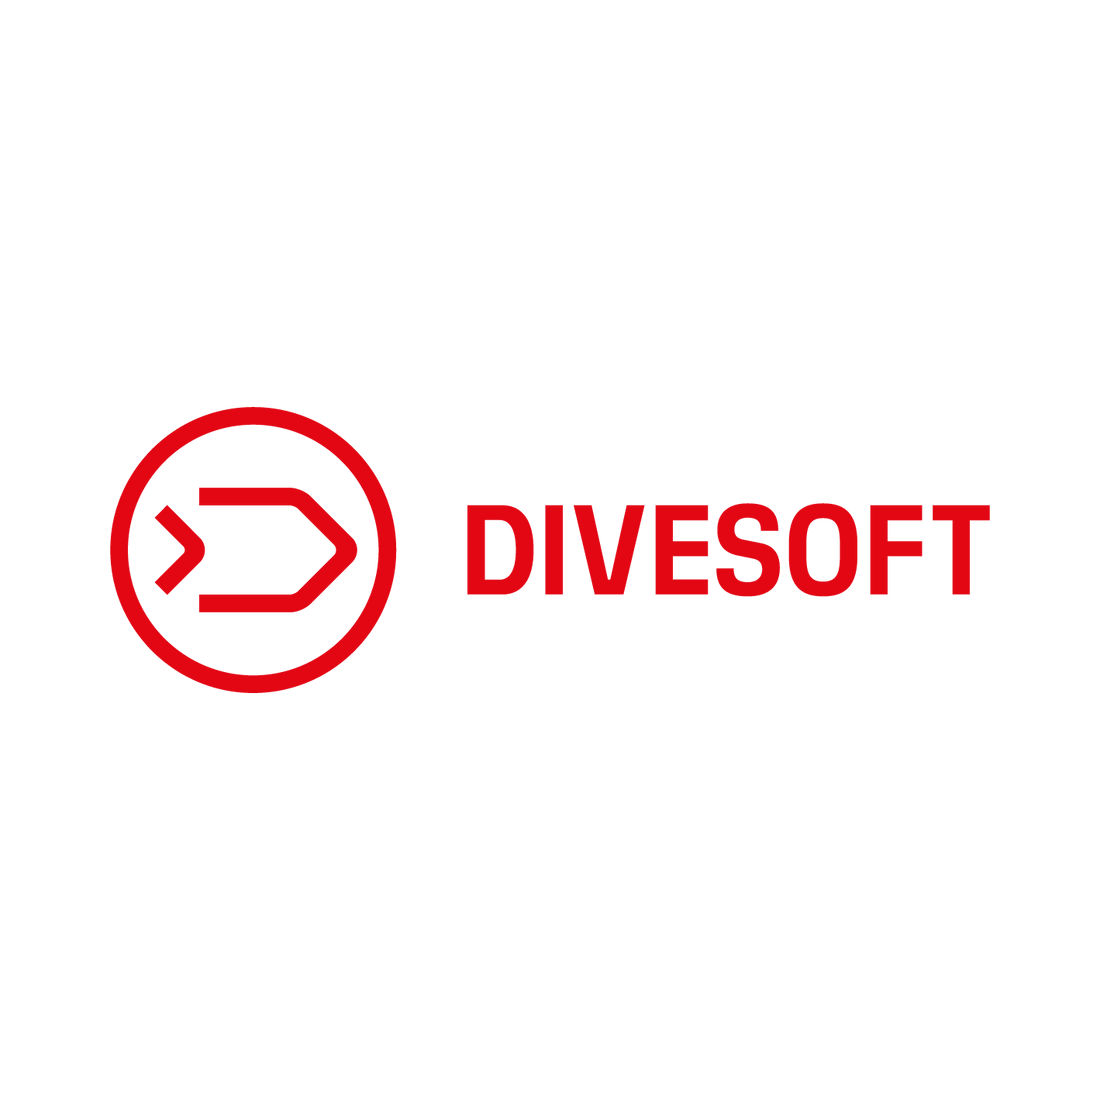  Divesoft